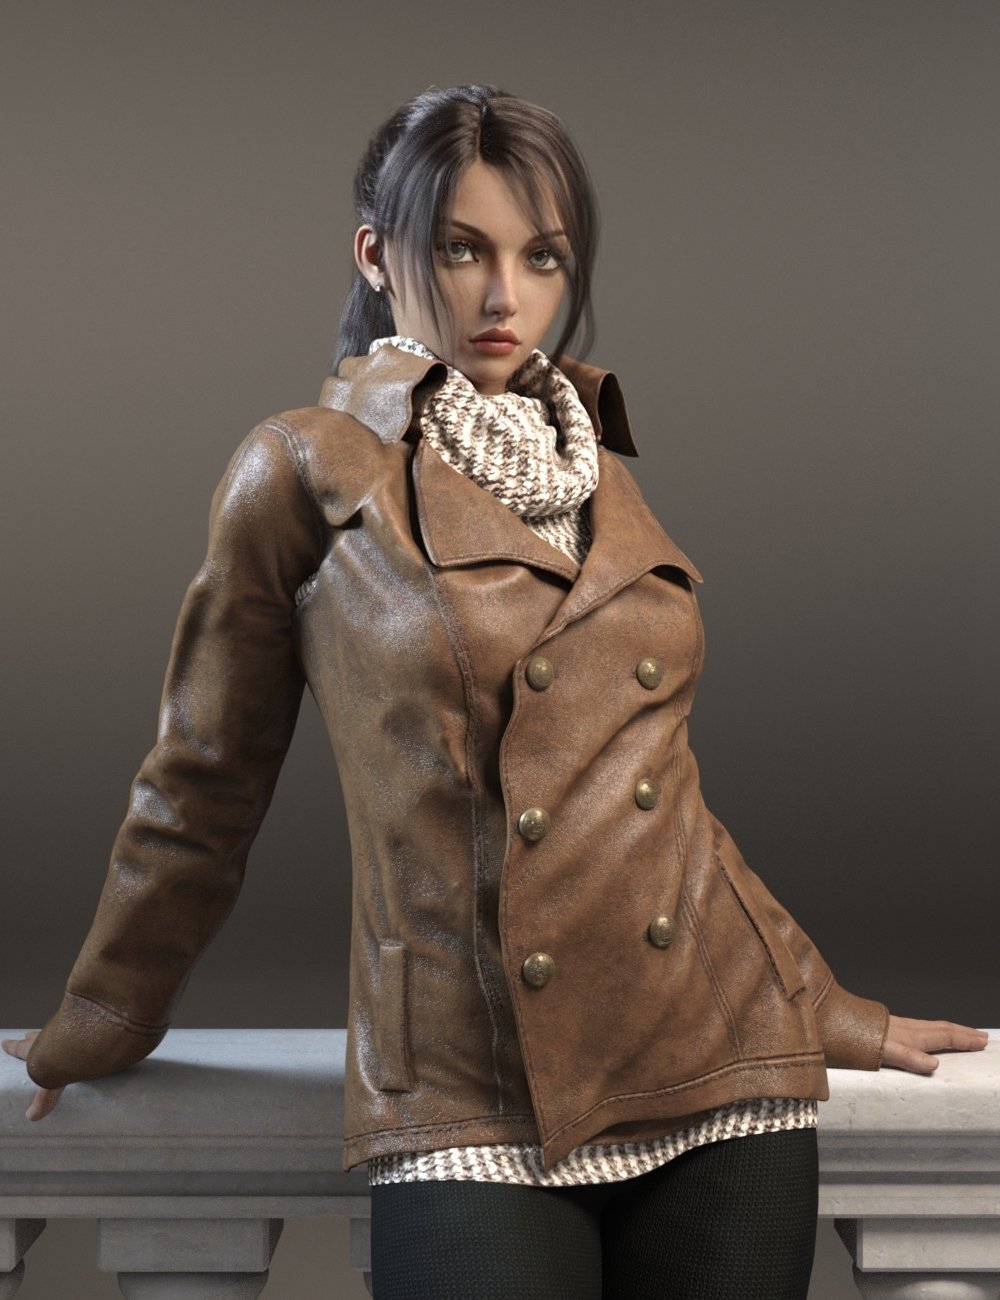 Kuroko for Genesis 8 Female by: Ergou, 3D Models by Daz 3D